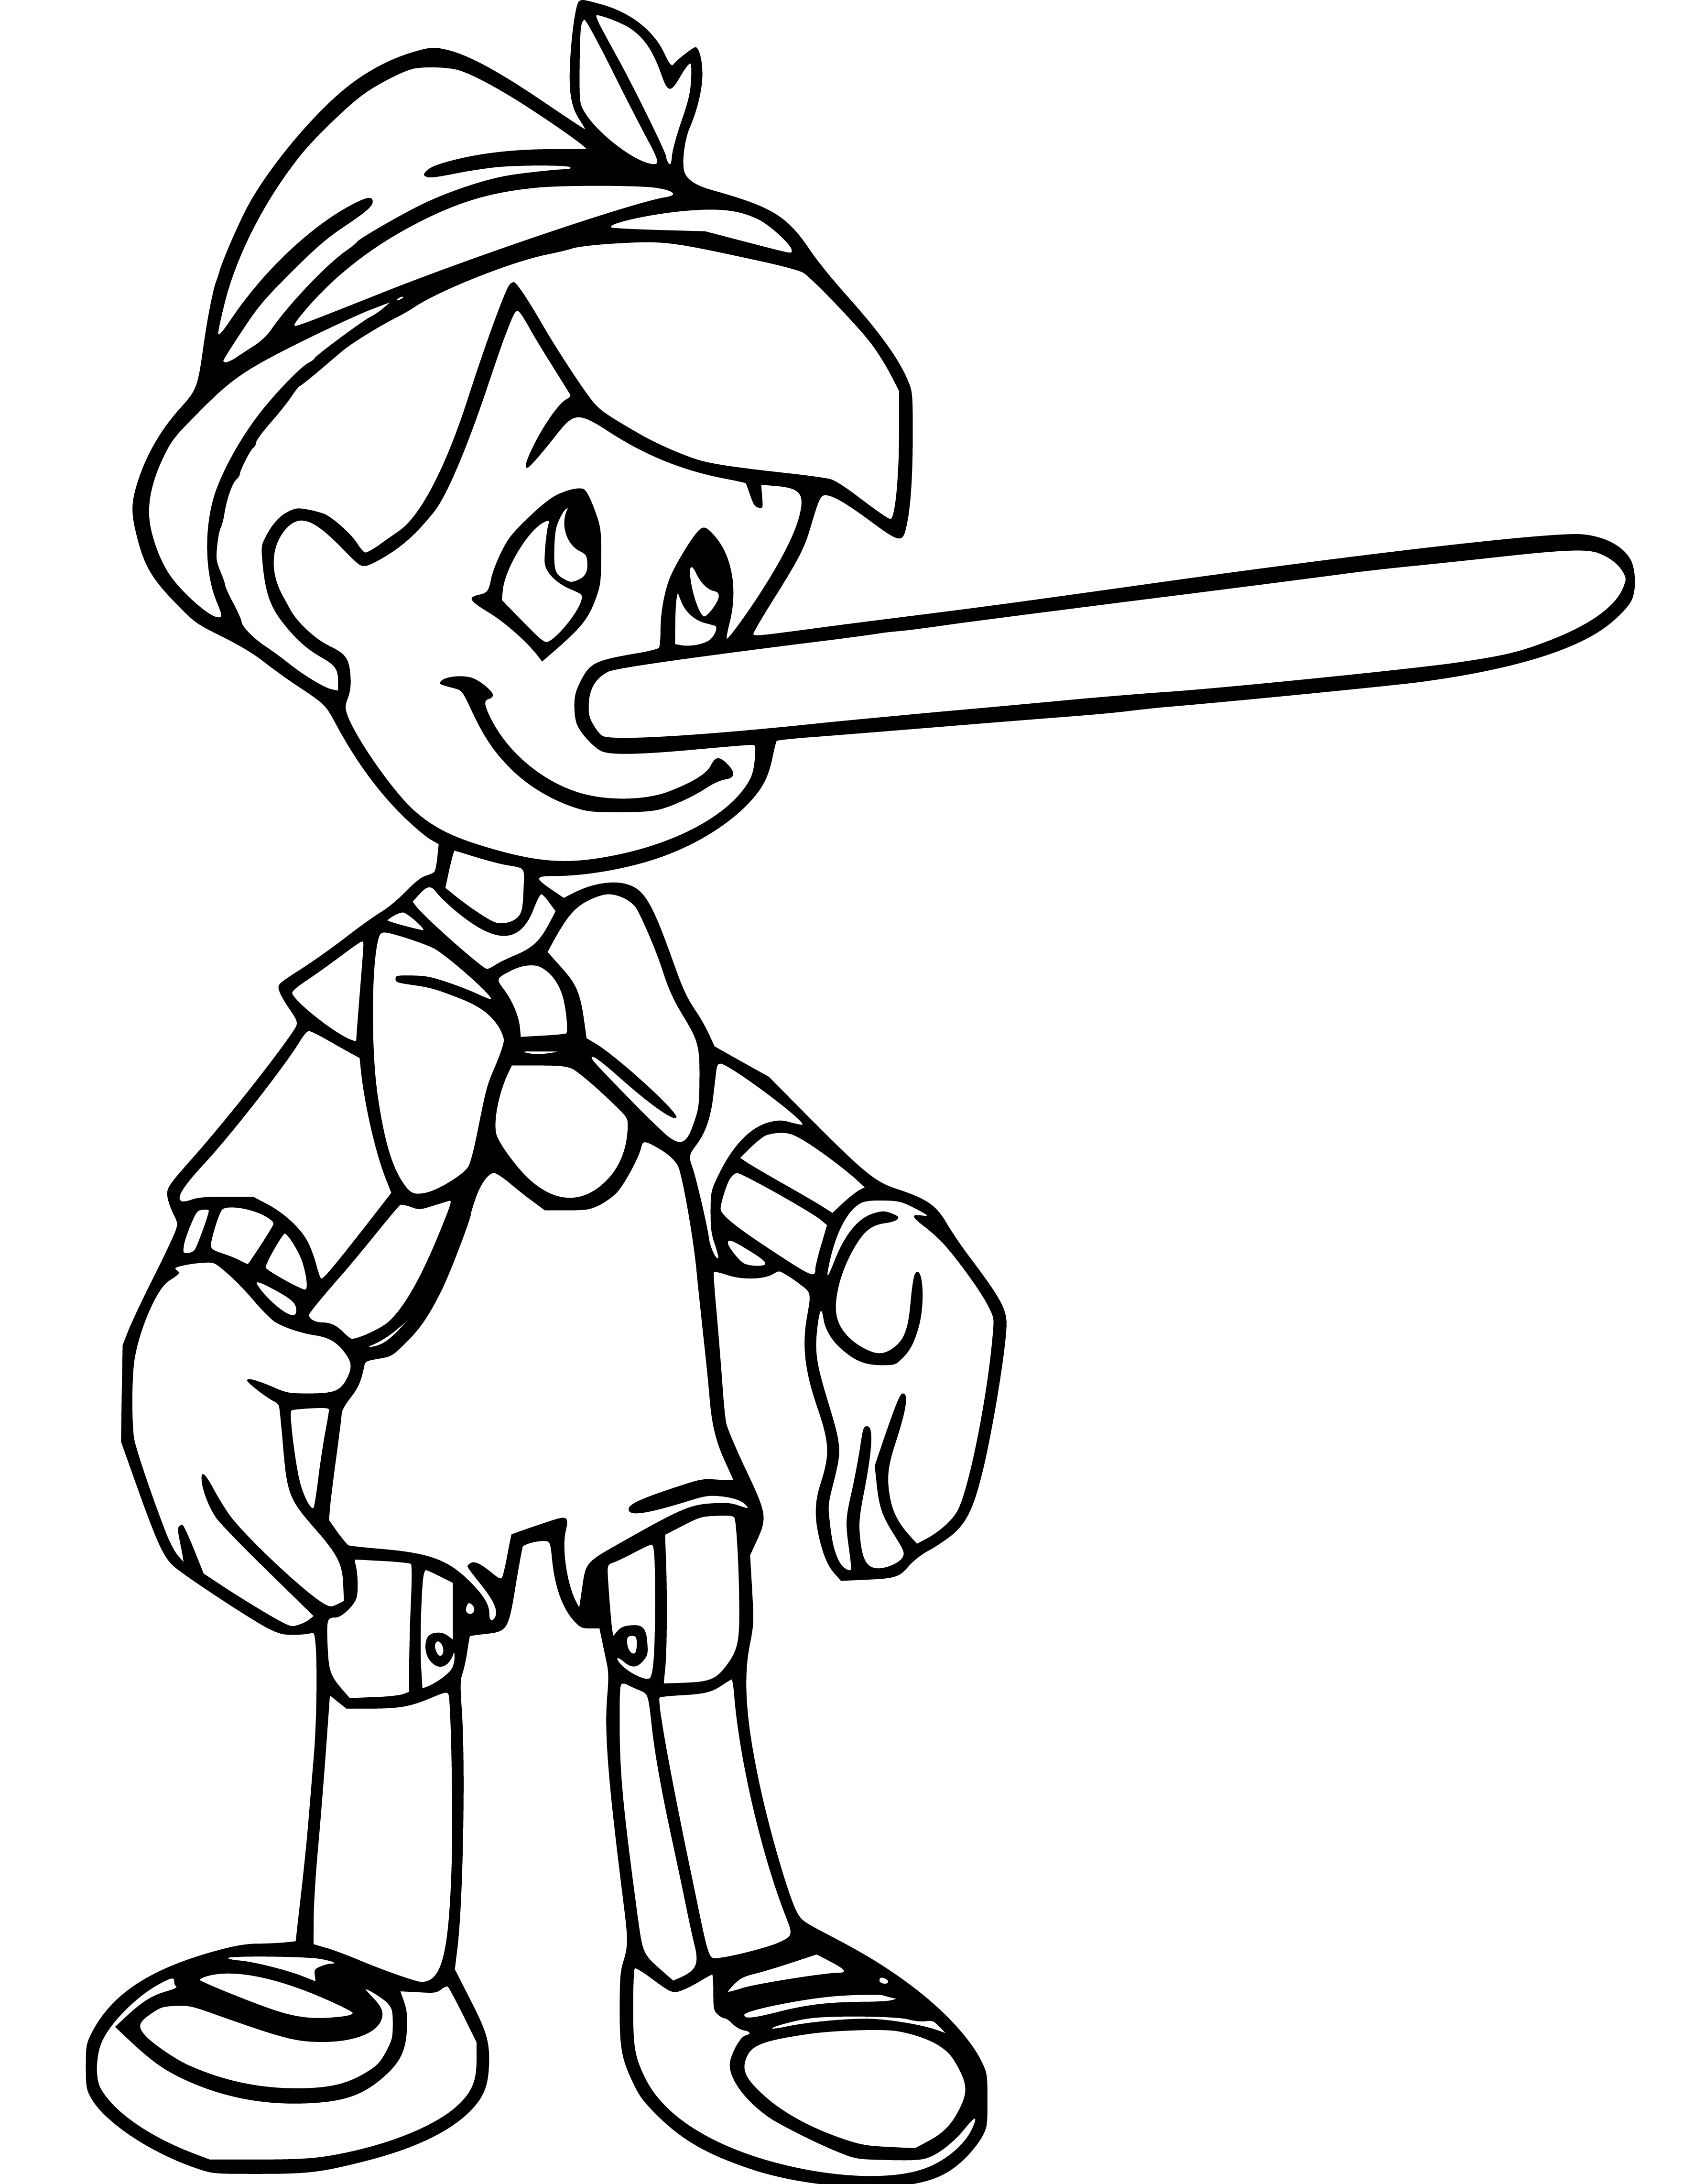 Pinocchio Long Nose Coloring Page - SheetalColor.com